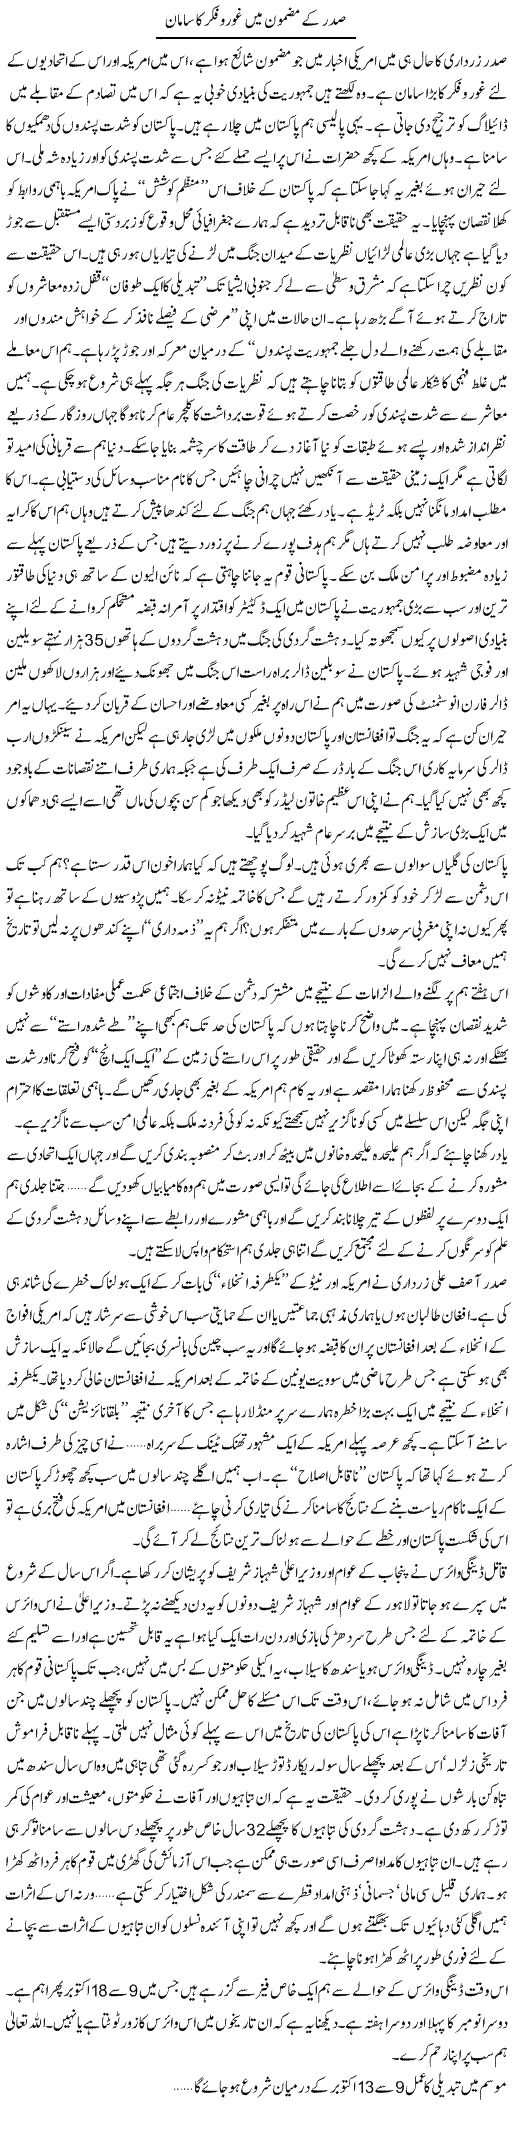 Zardari's Sayings Express Column Zamurd Naqvi 10 October 2011